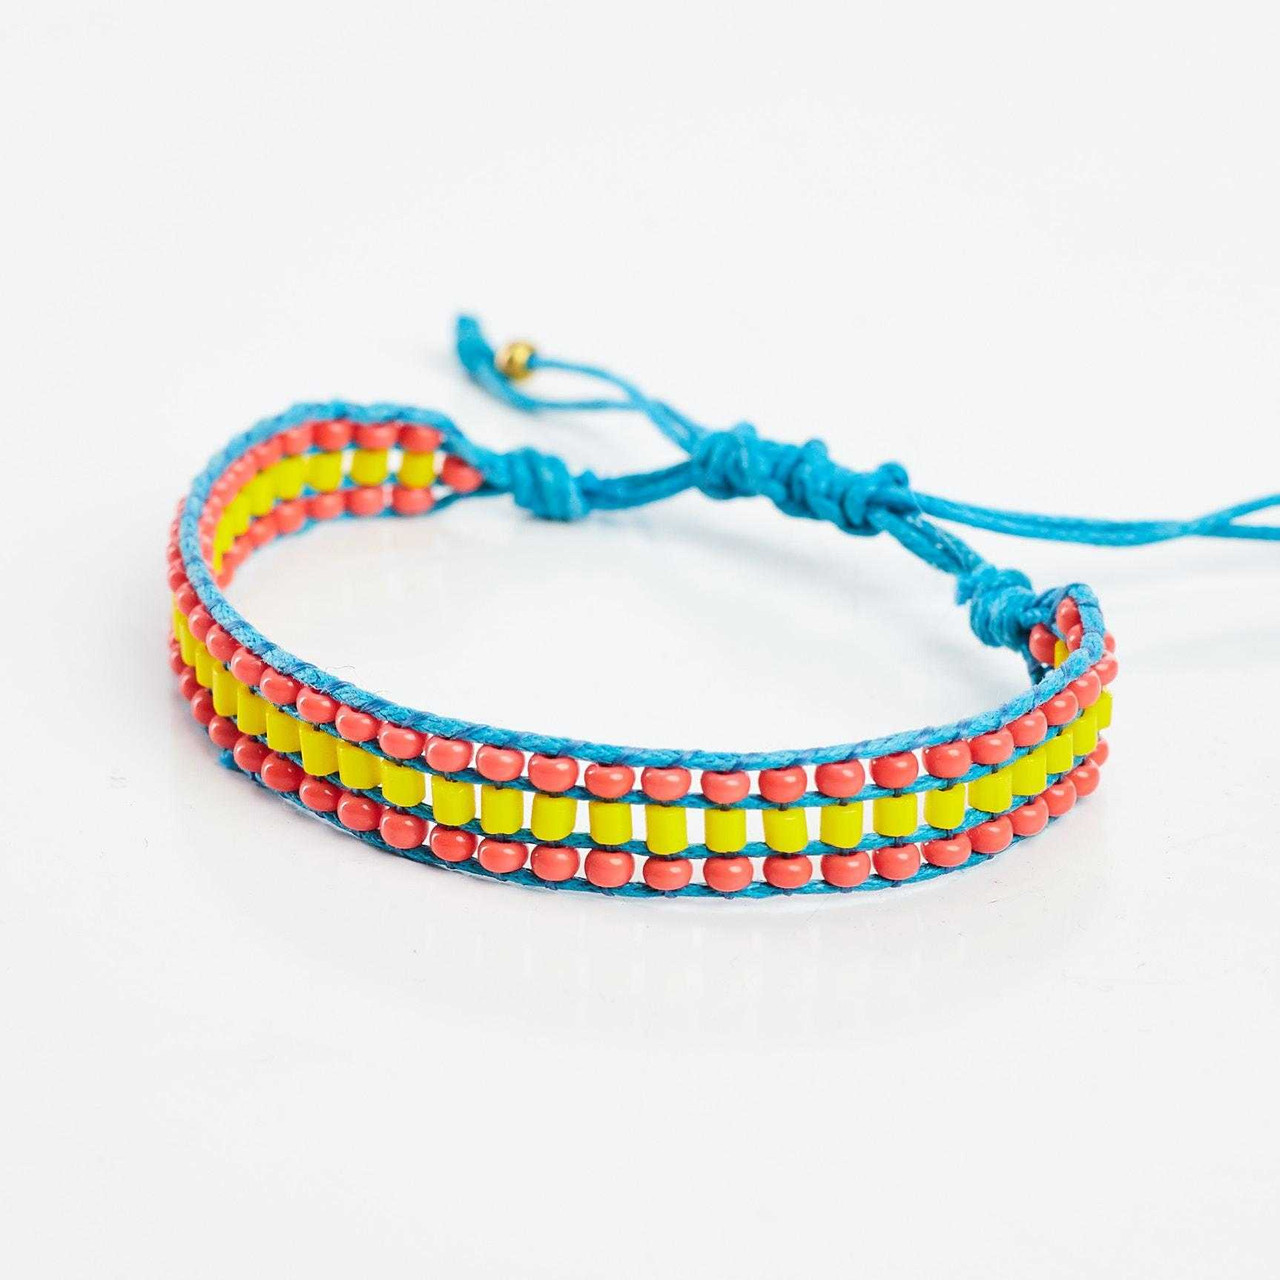 Braided colorful rope friendship bracelets handmade background Stock Photo